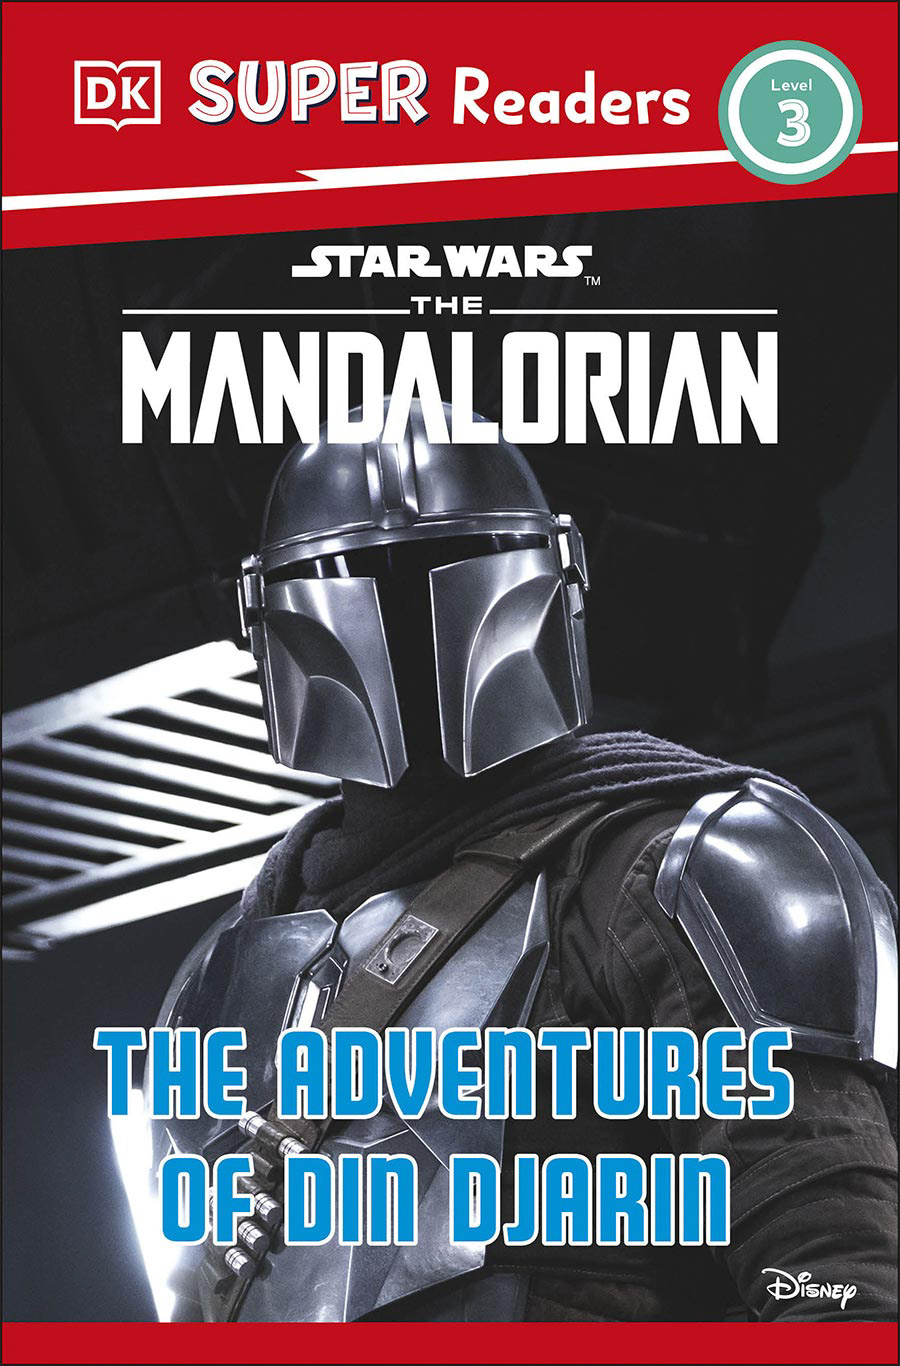 DK Super Readers Level 3 Star Wars The Mandalorian The Adventures Of Din Djarin HC